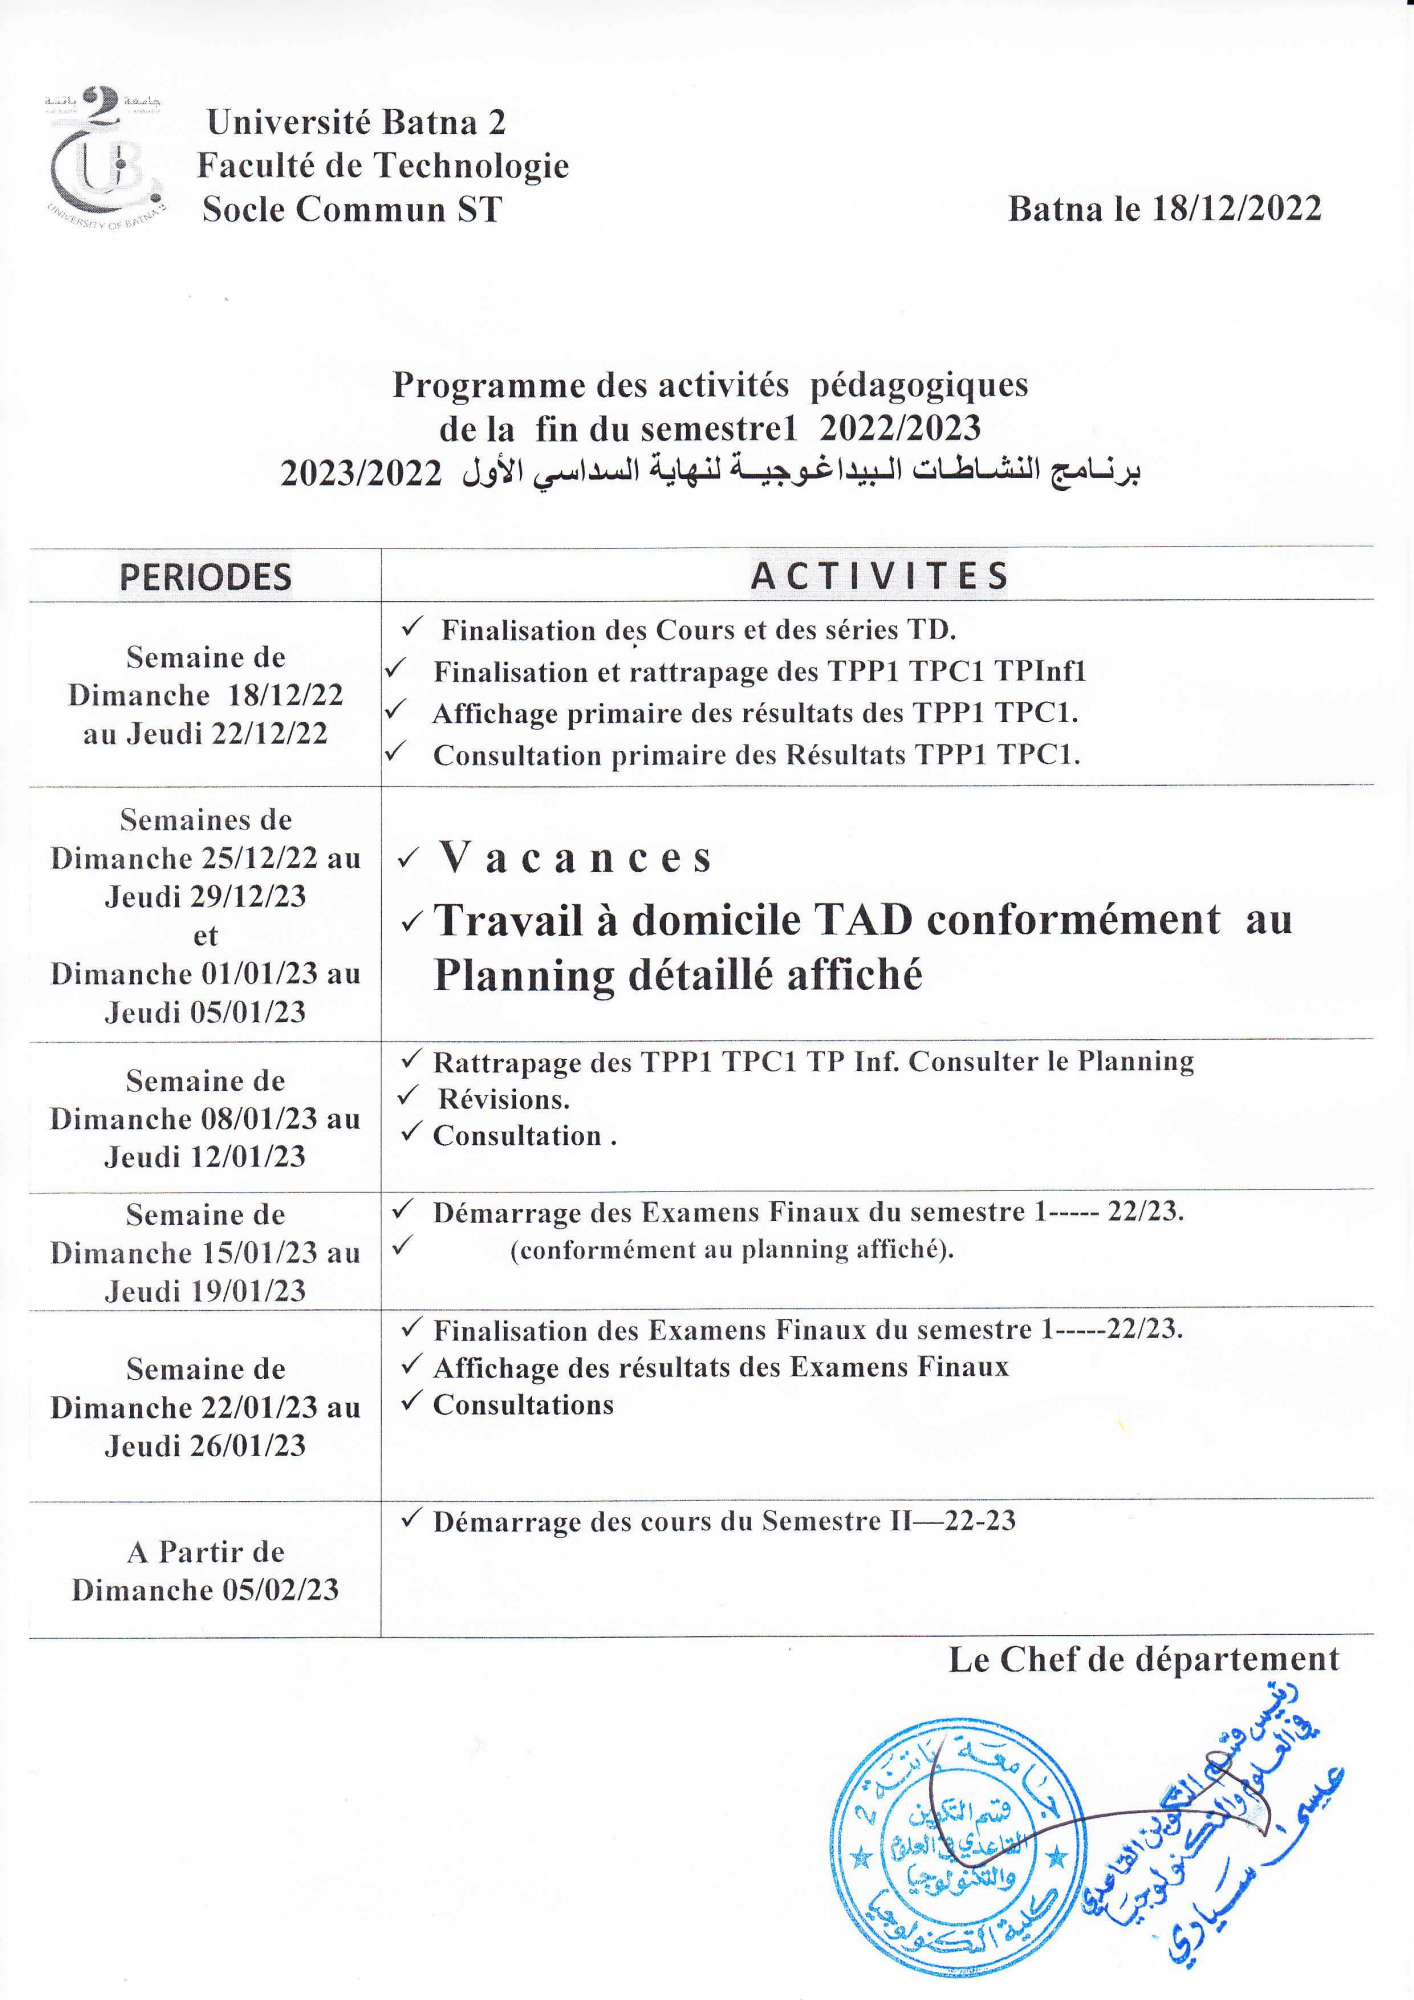 planning_des_activites_pedago_fin_sem1_deb_sem2_2022-2023.jpg